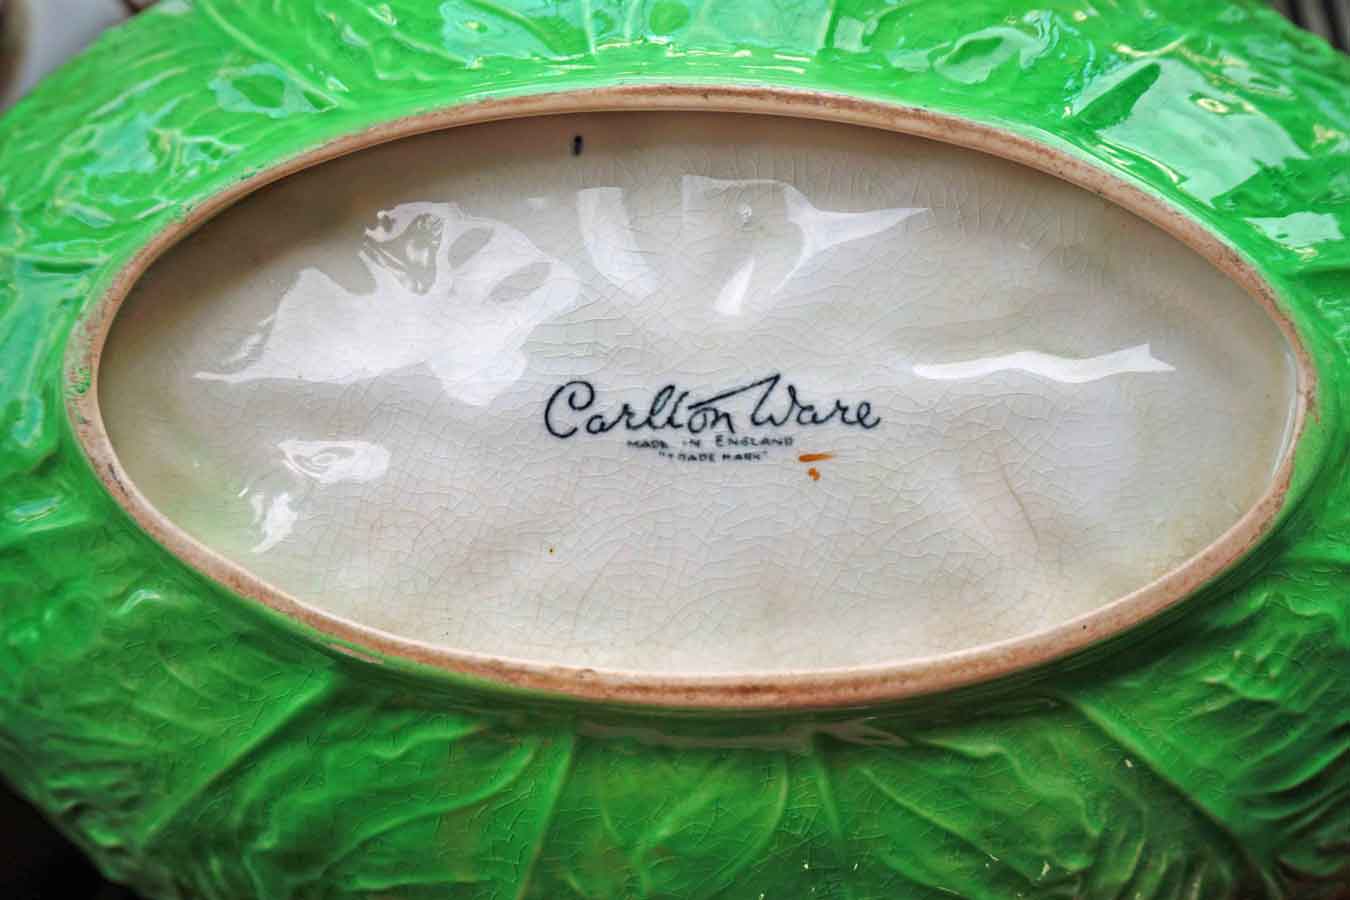 Vintage Carlton Ware Lettuce Serving Bowl - 1950's kitsch eco kitchen ware - ada's attic vintage